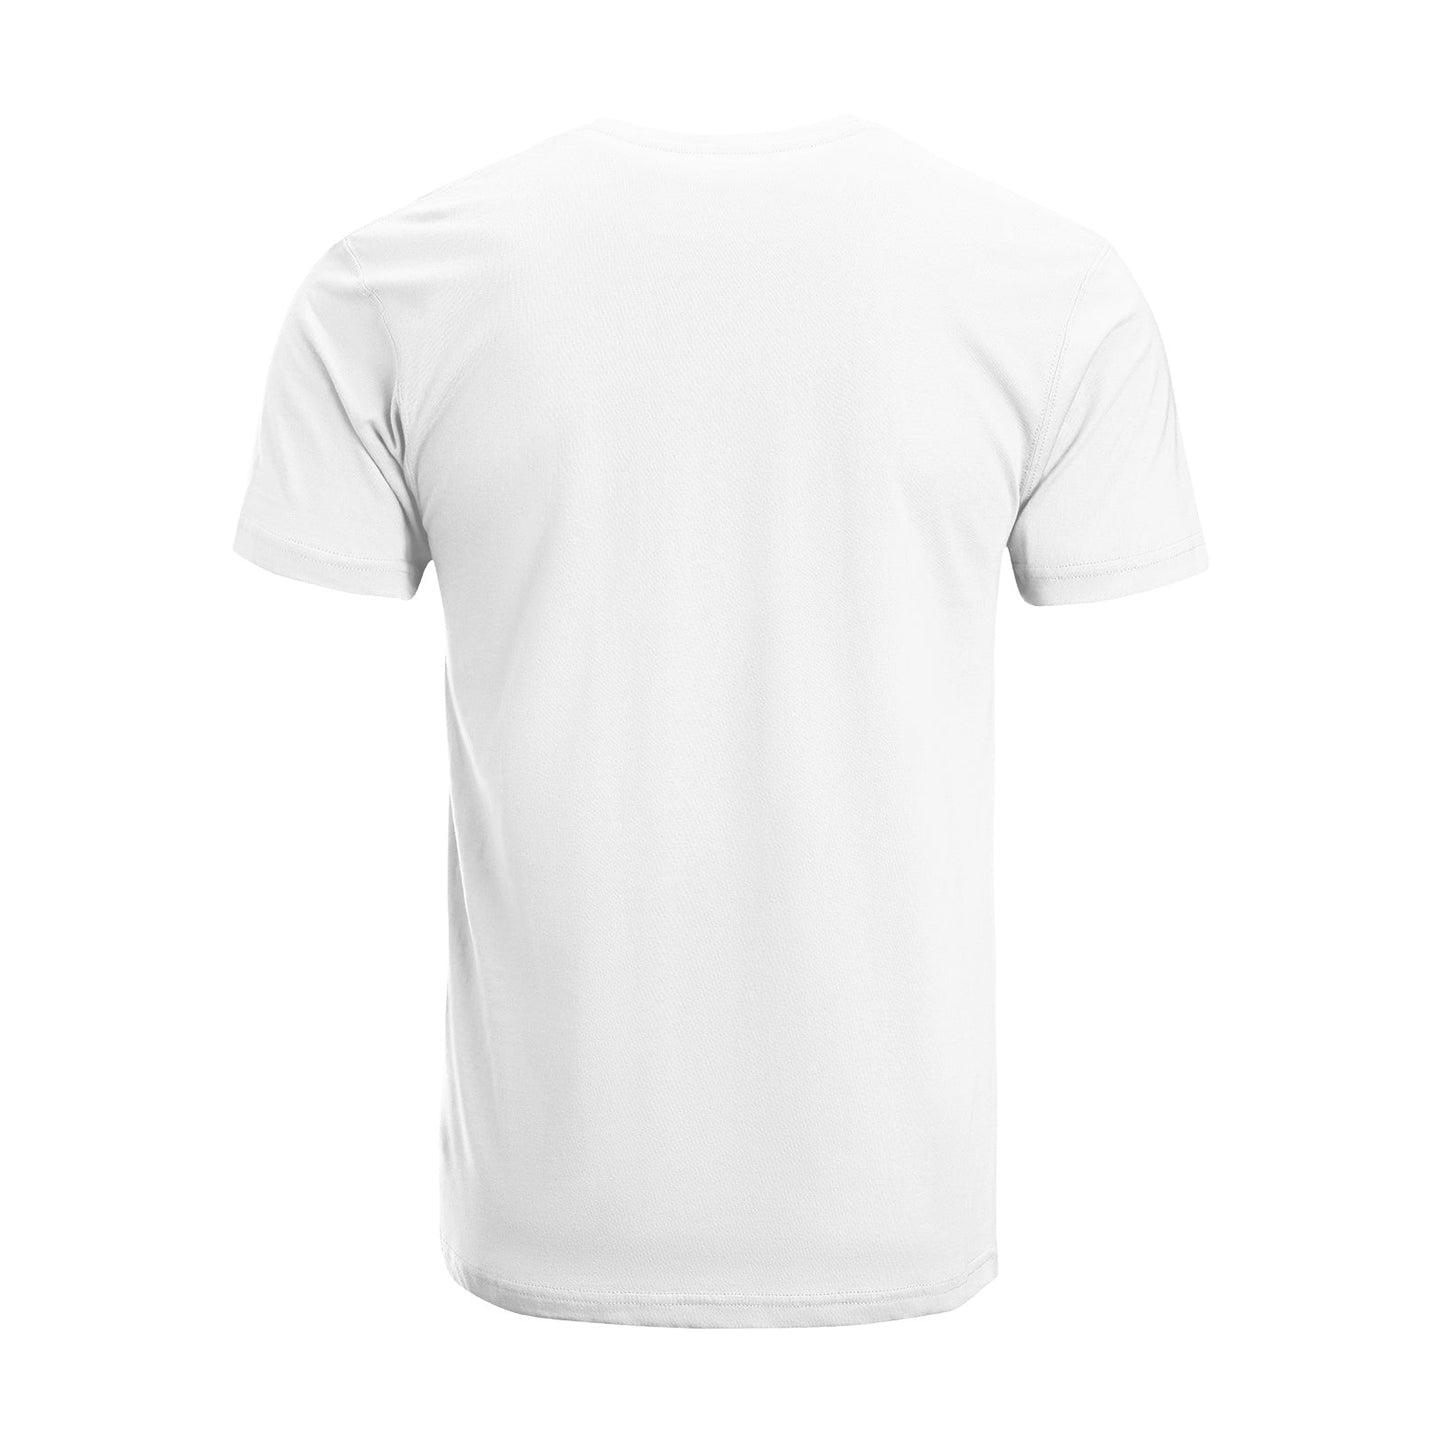 Unisex Short Sleeve Crew Neck Cotton Jersey T-Shirt Gym No. 17 - Tara-Outfits.com